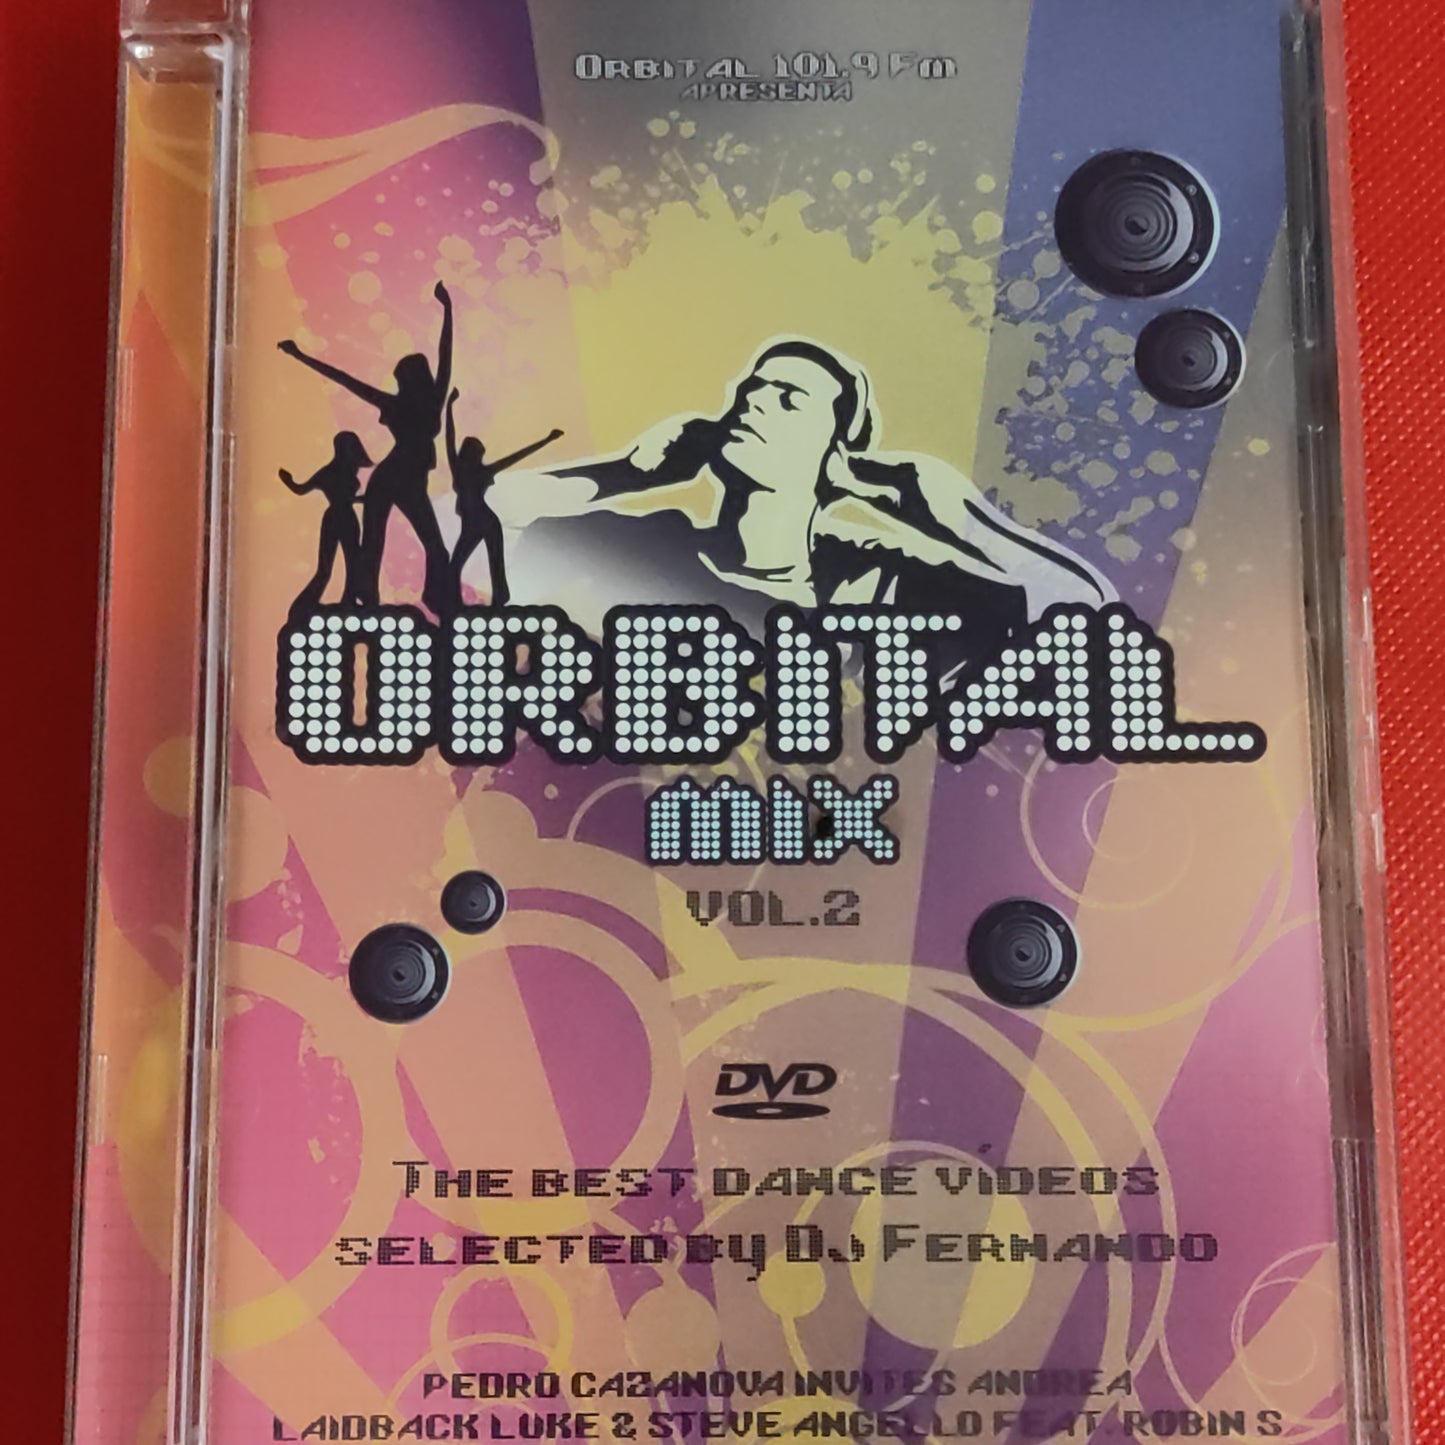 Orbital mix volume 2